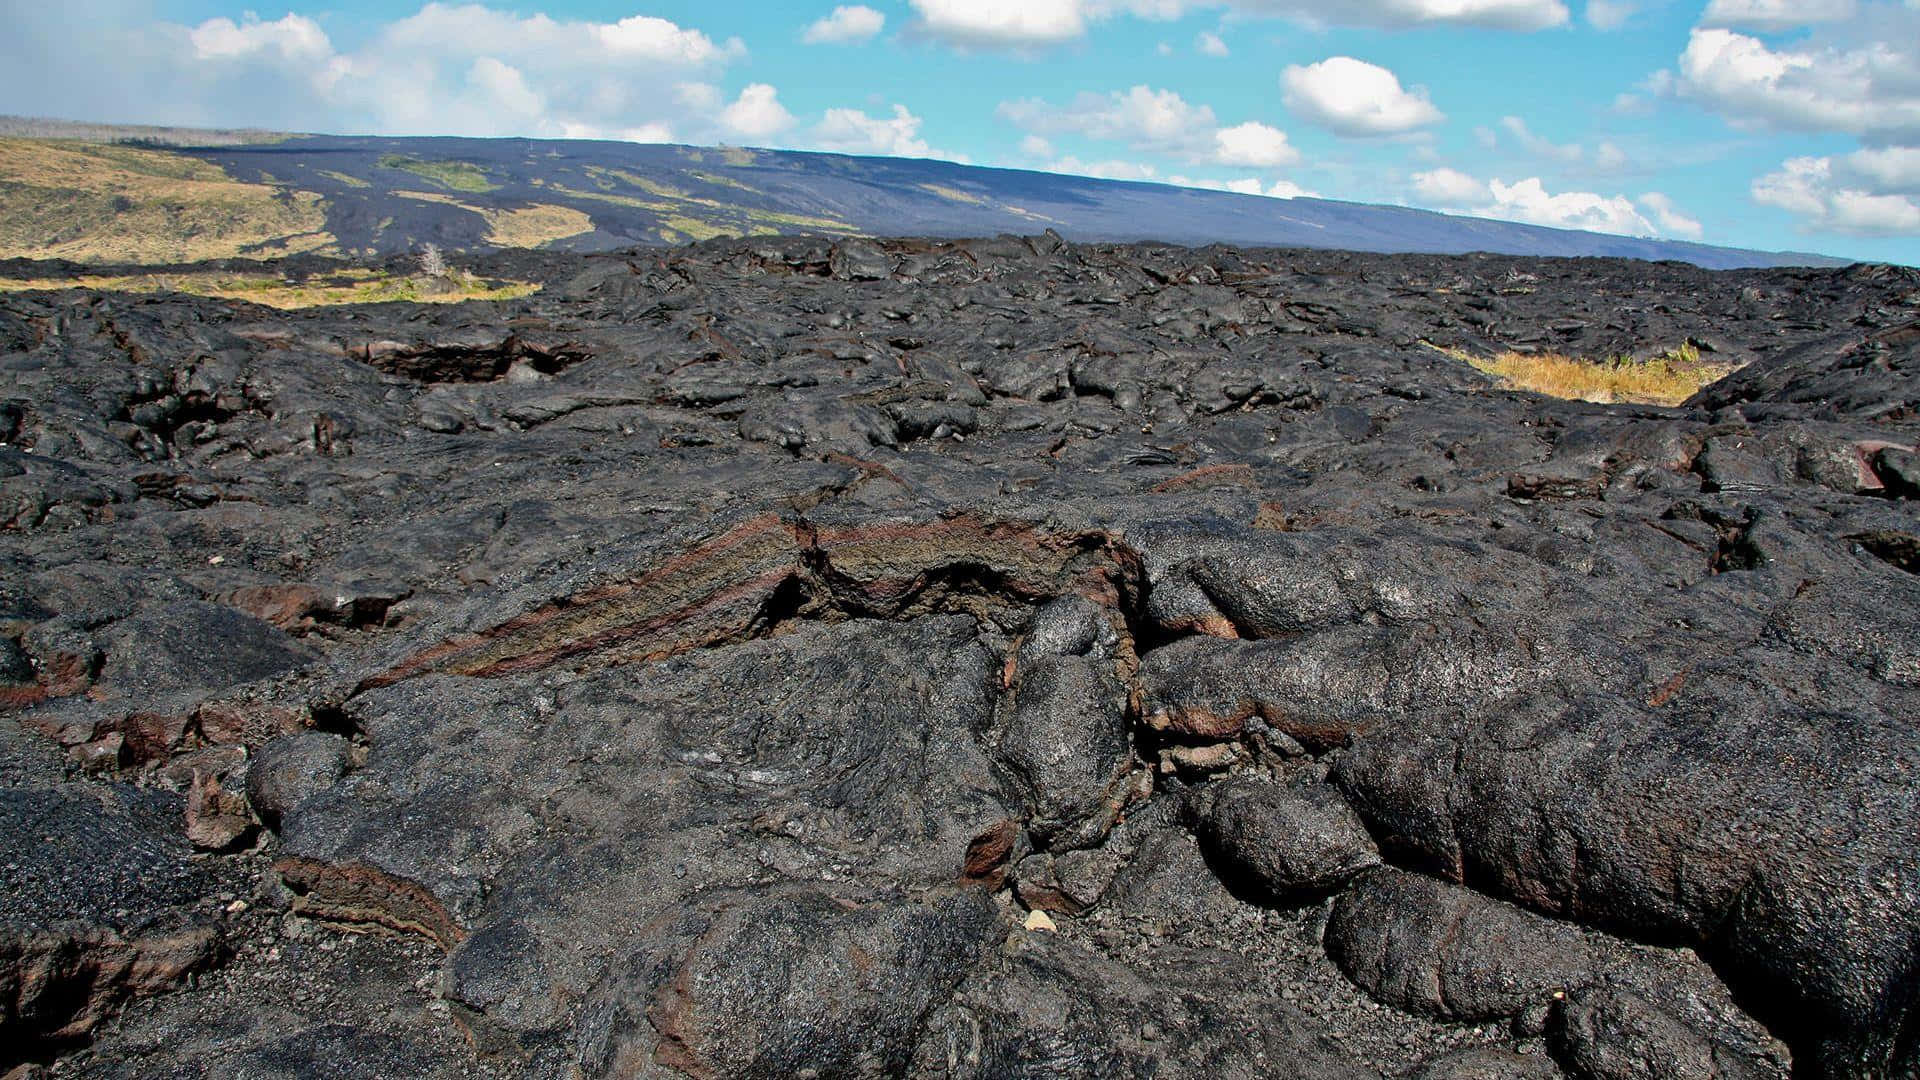 Hawaiivolcanoes National Park Black Rock Would Be Translated To Hawaii Vulkaner Nationalpark Svart Sten In Swedish. Wallpaper